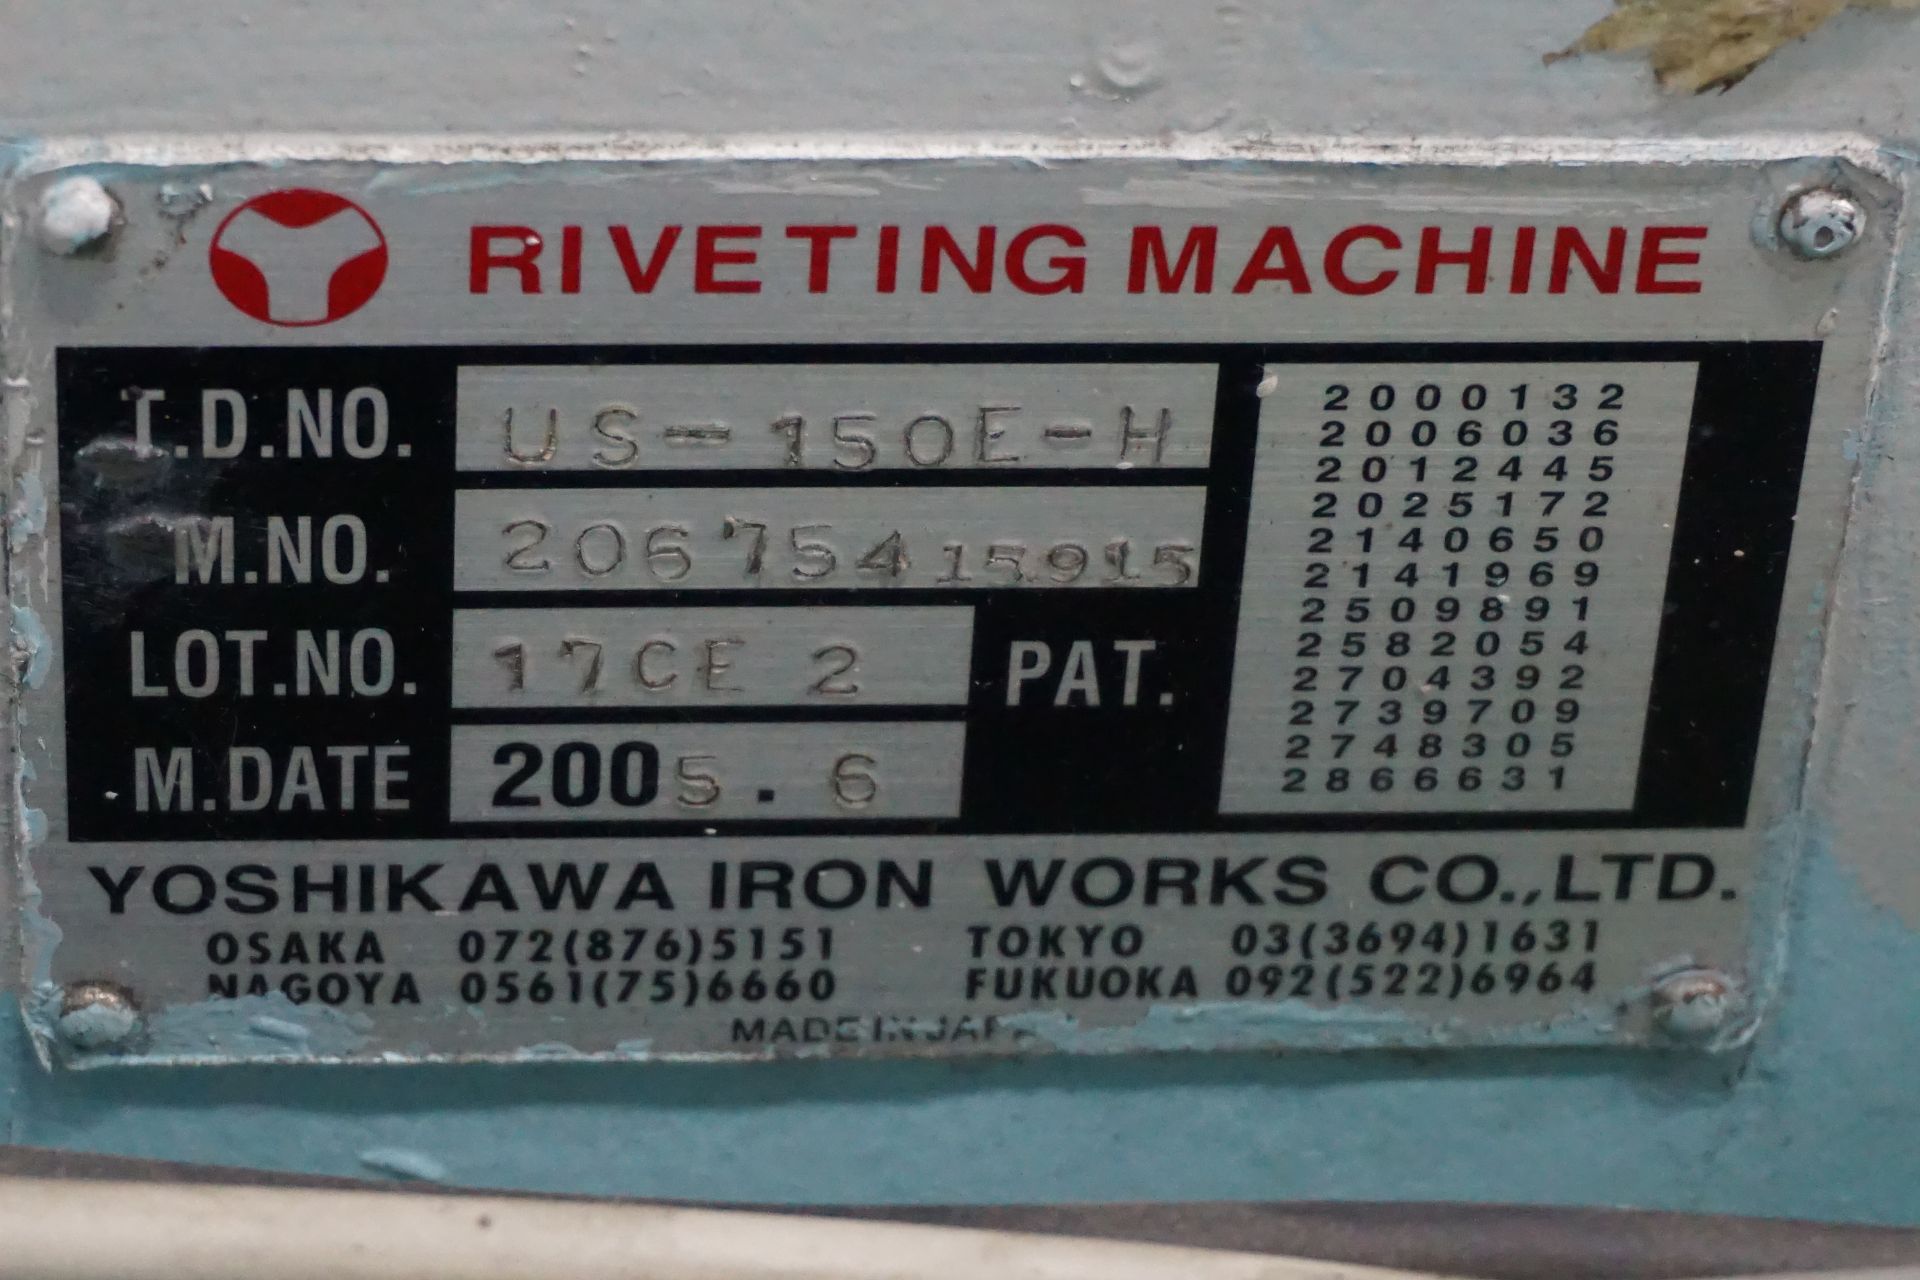 Hydraulic spin rivet machine with Yoshikawa US-150 E-H rivet spinner - Image 6 of 6